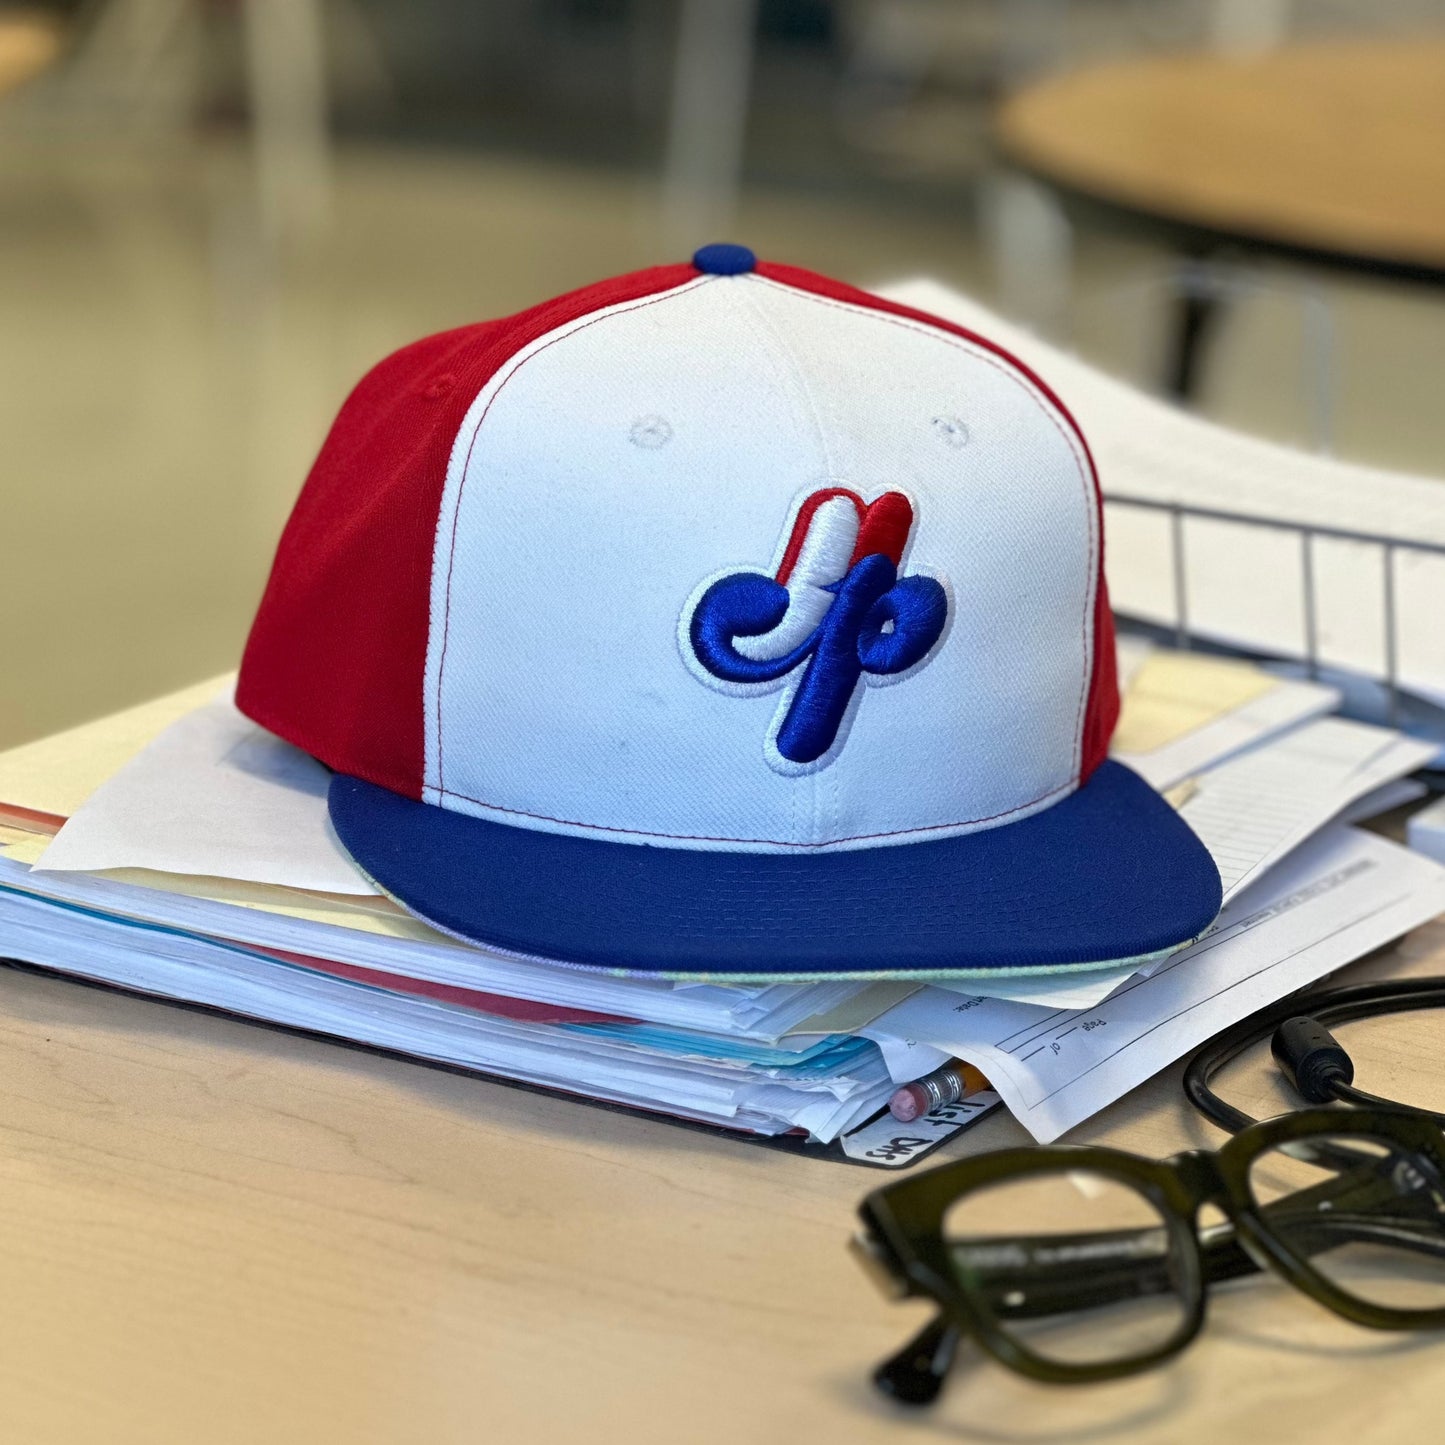 Hi Post EXPOS'D "Fitted" Baseball Cap (NOT CUSTOM) PRE-ORDER